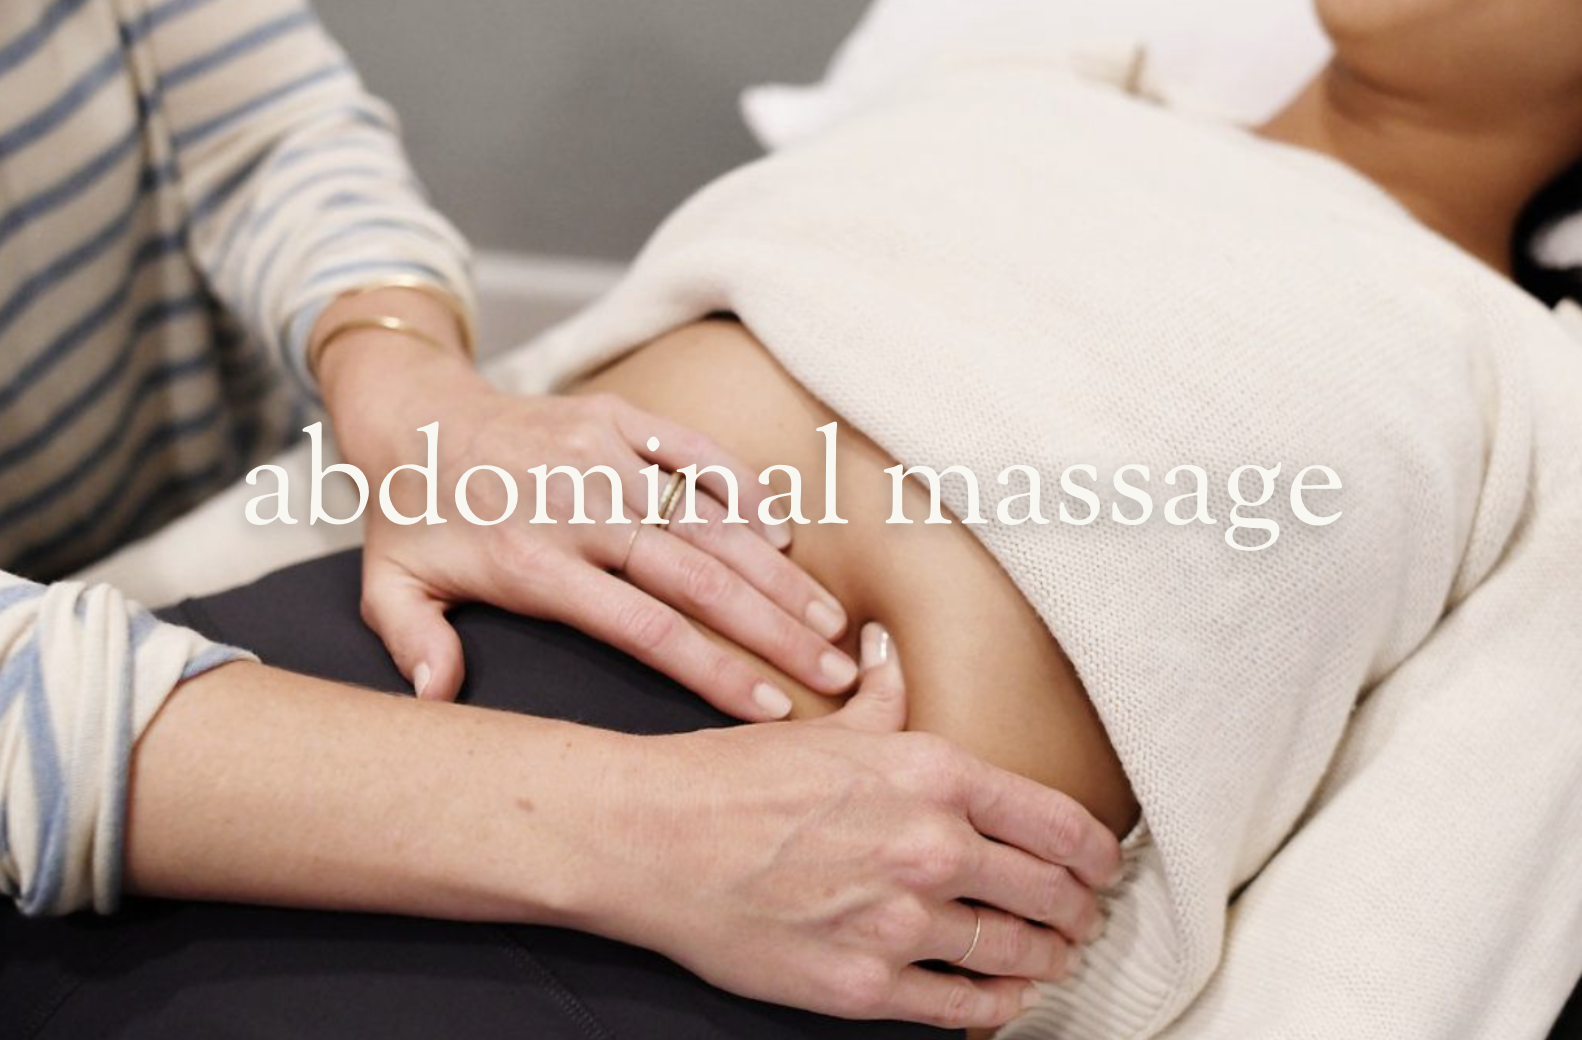 abdominal massage | free